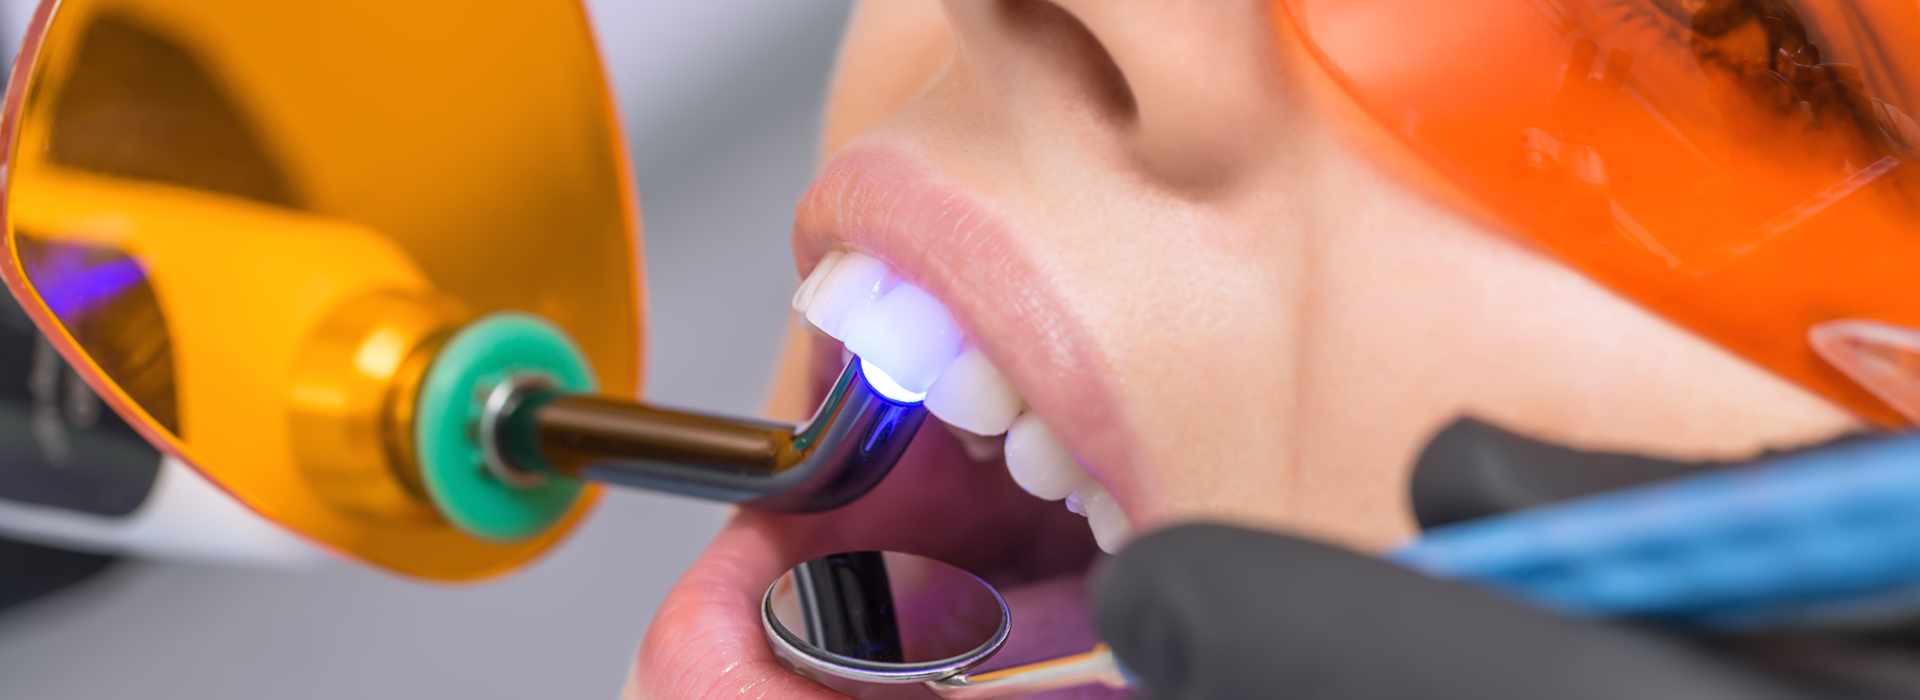 A woman is having restorative dental treatment.